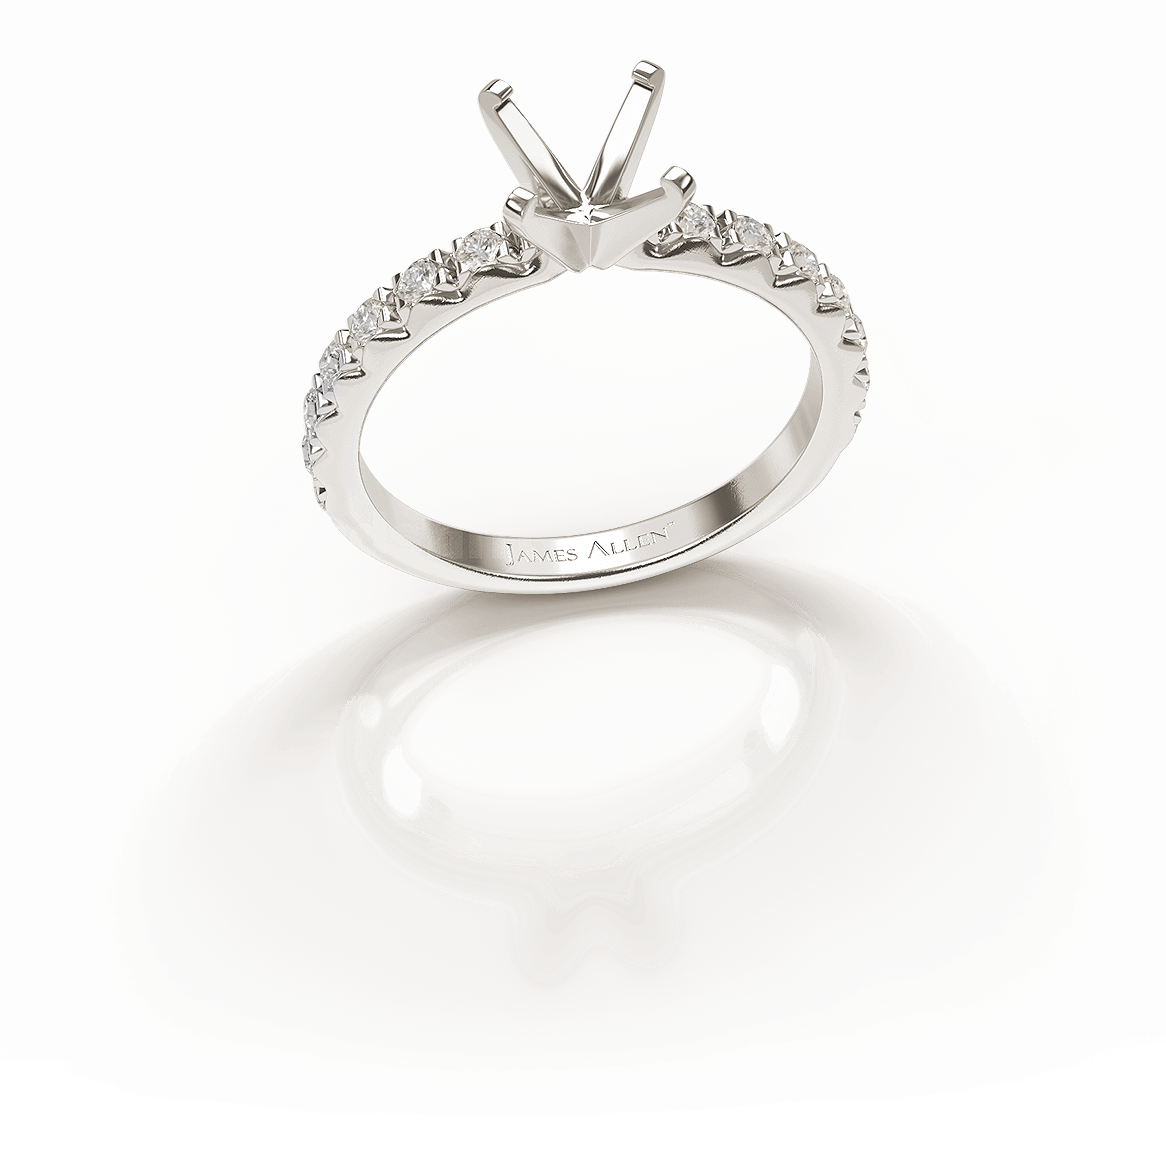 Black and White Diamond V Logo - Shop Engagement Rings and Loose Diamonds Online | JamesAllen.com